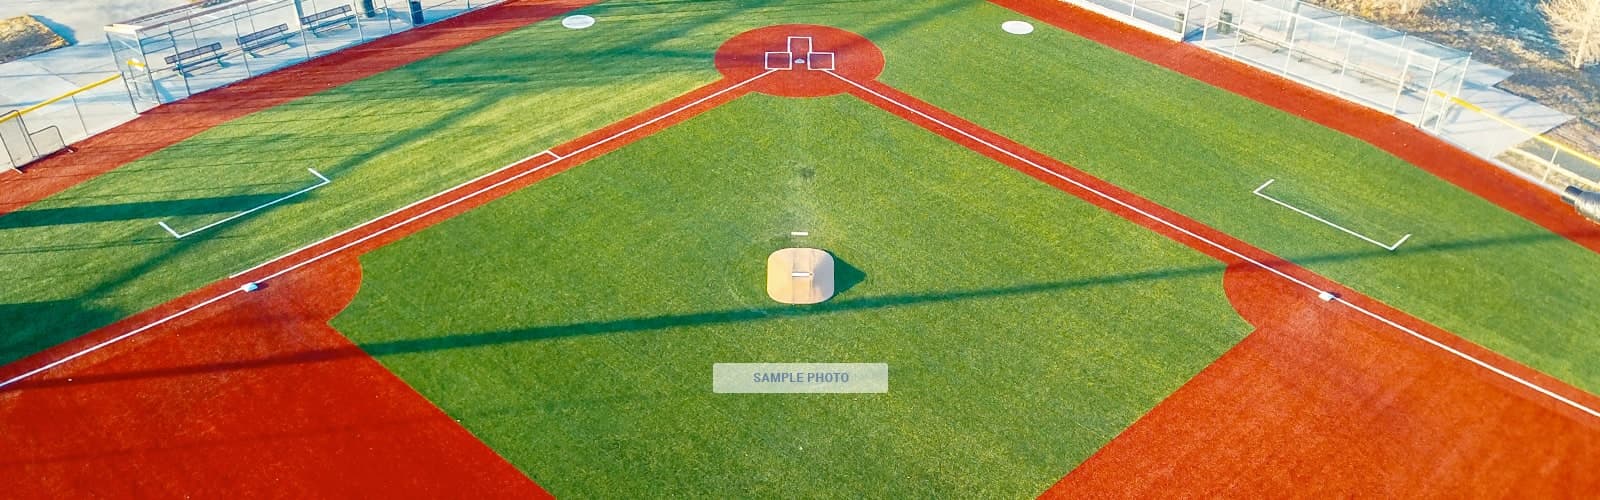 Hawthorne High School Field - Baseball in Hawthorne California - undefined